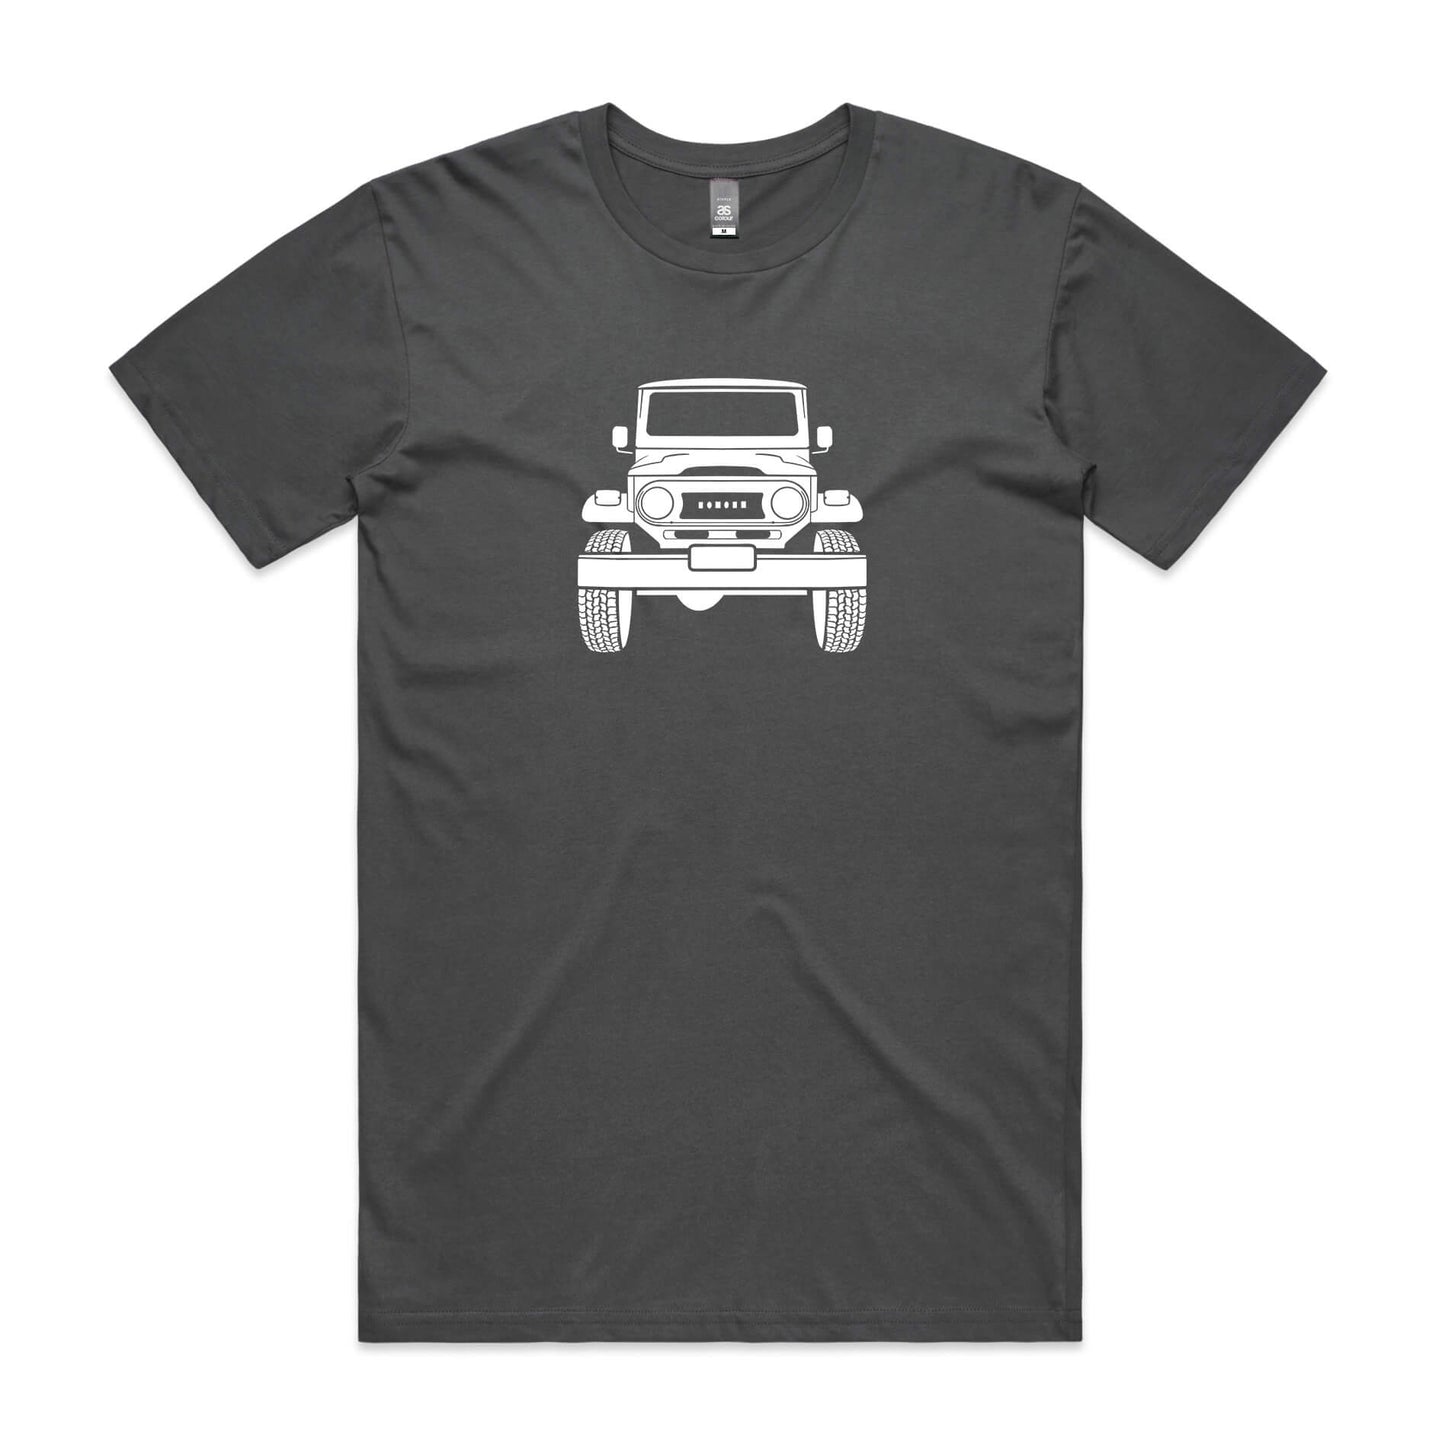 Toyota LandCruiser FJ40 t-shirt in charcoal grey